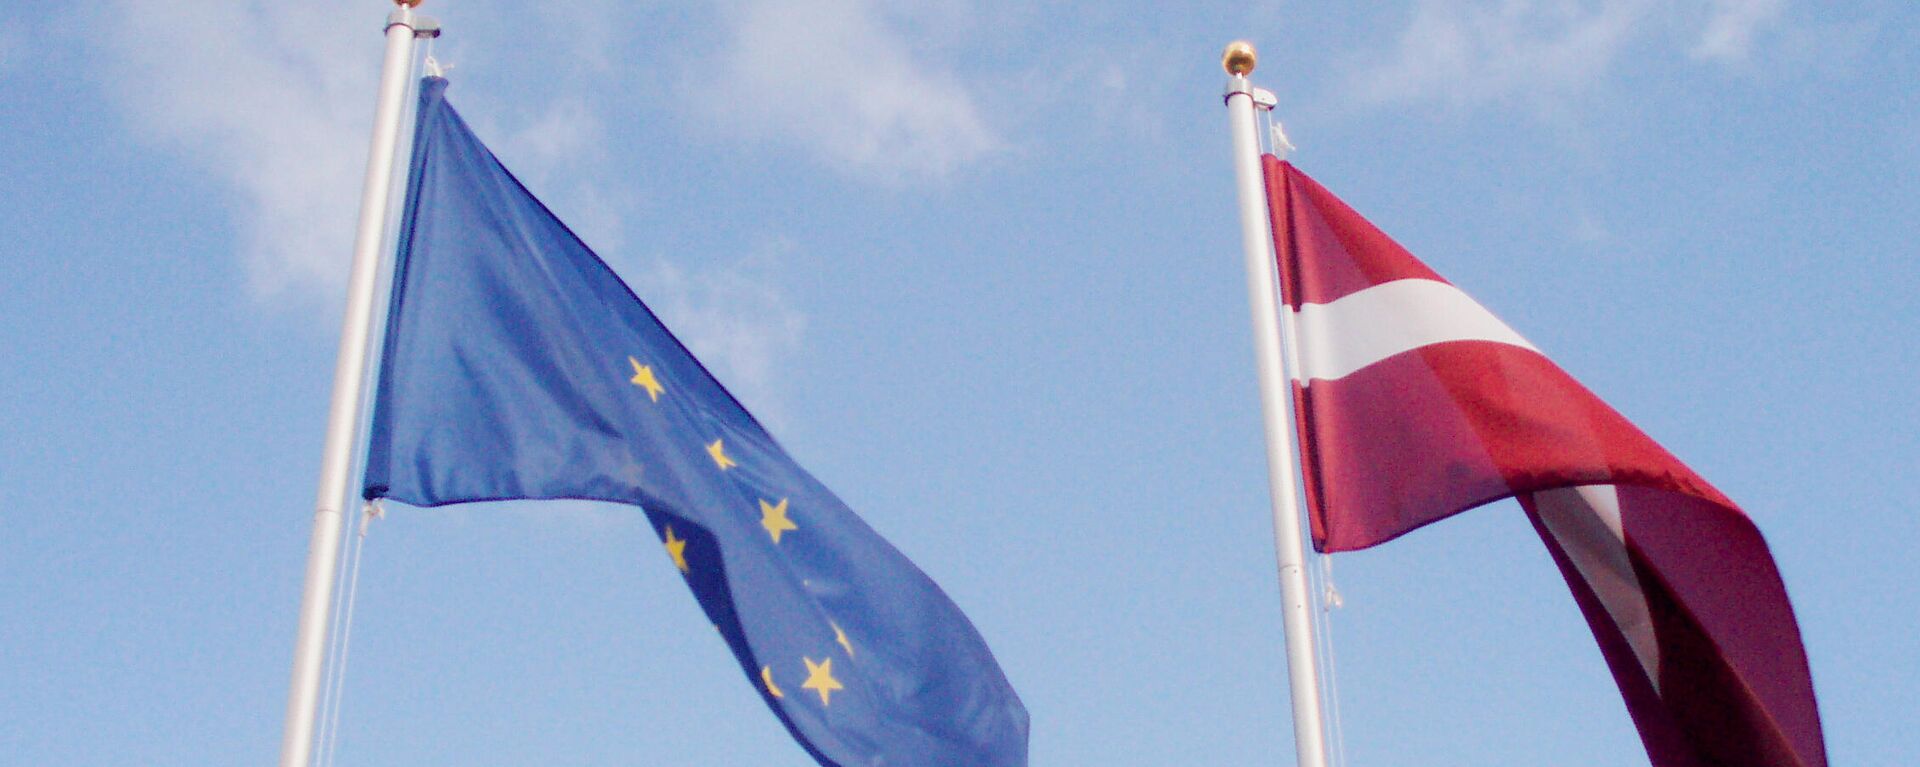 Флаги ЕС и Латвии - Sputnik Латвия, 1920, 03.12.2021